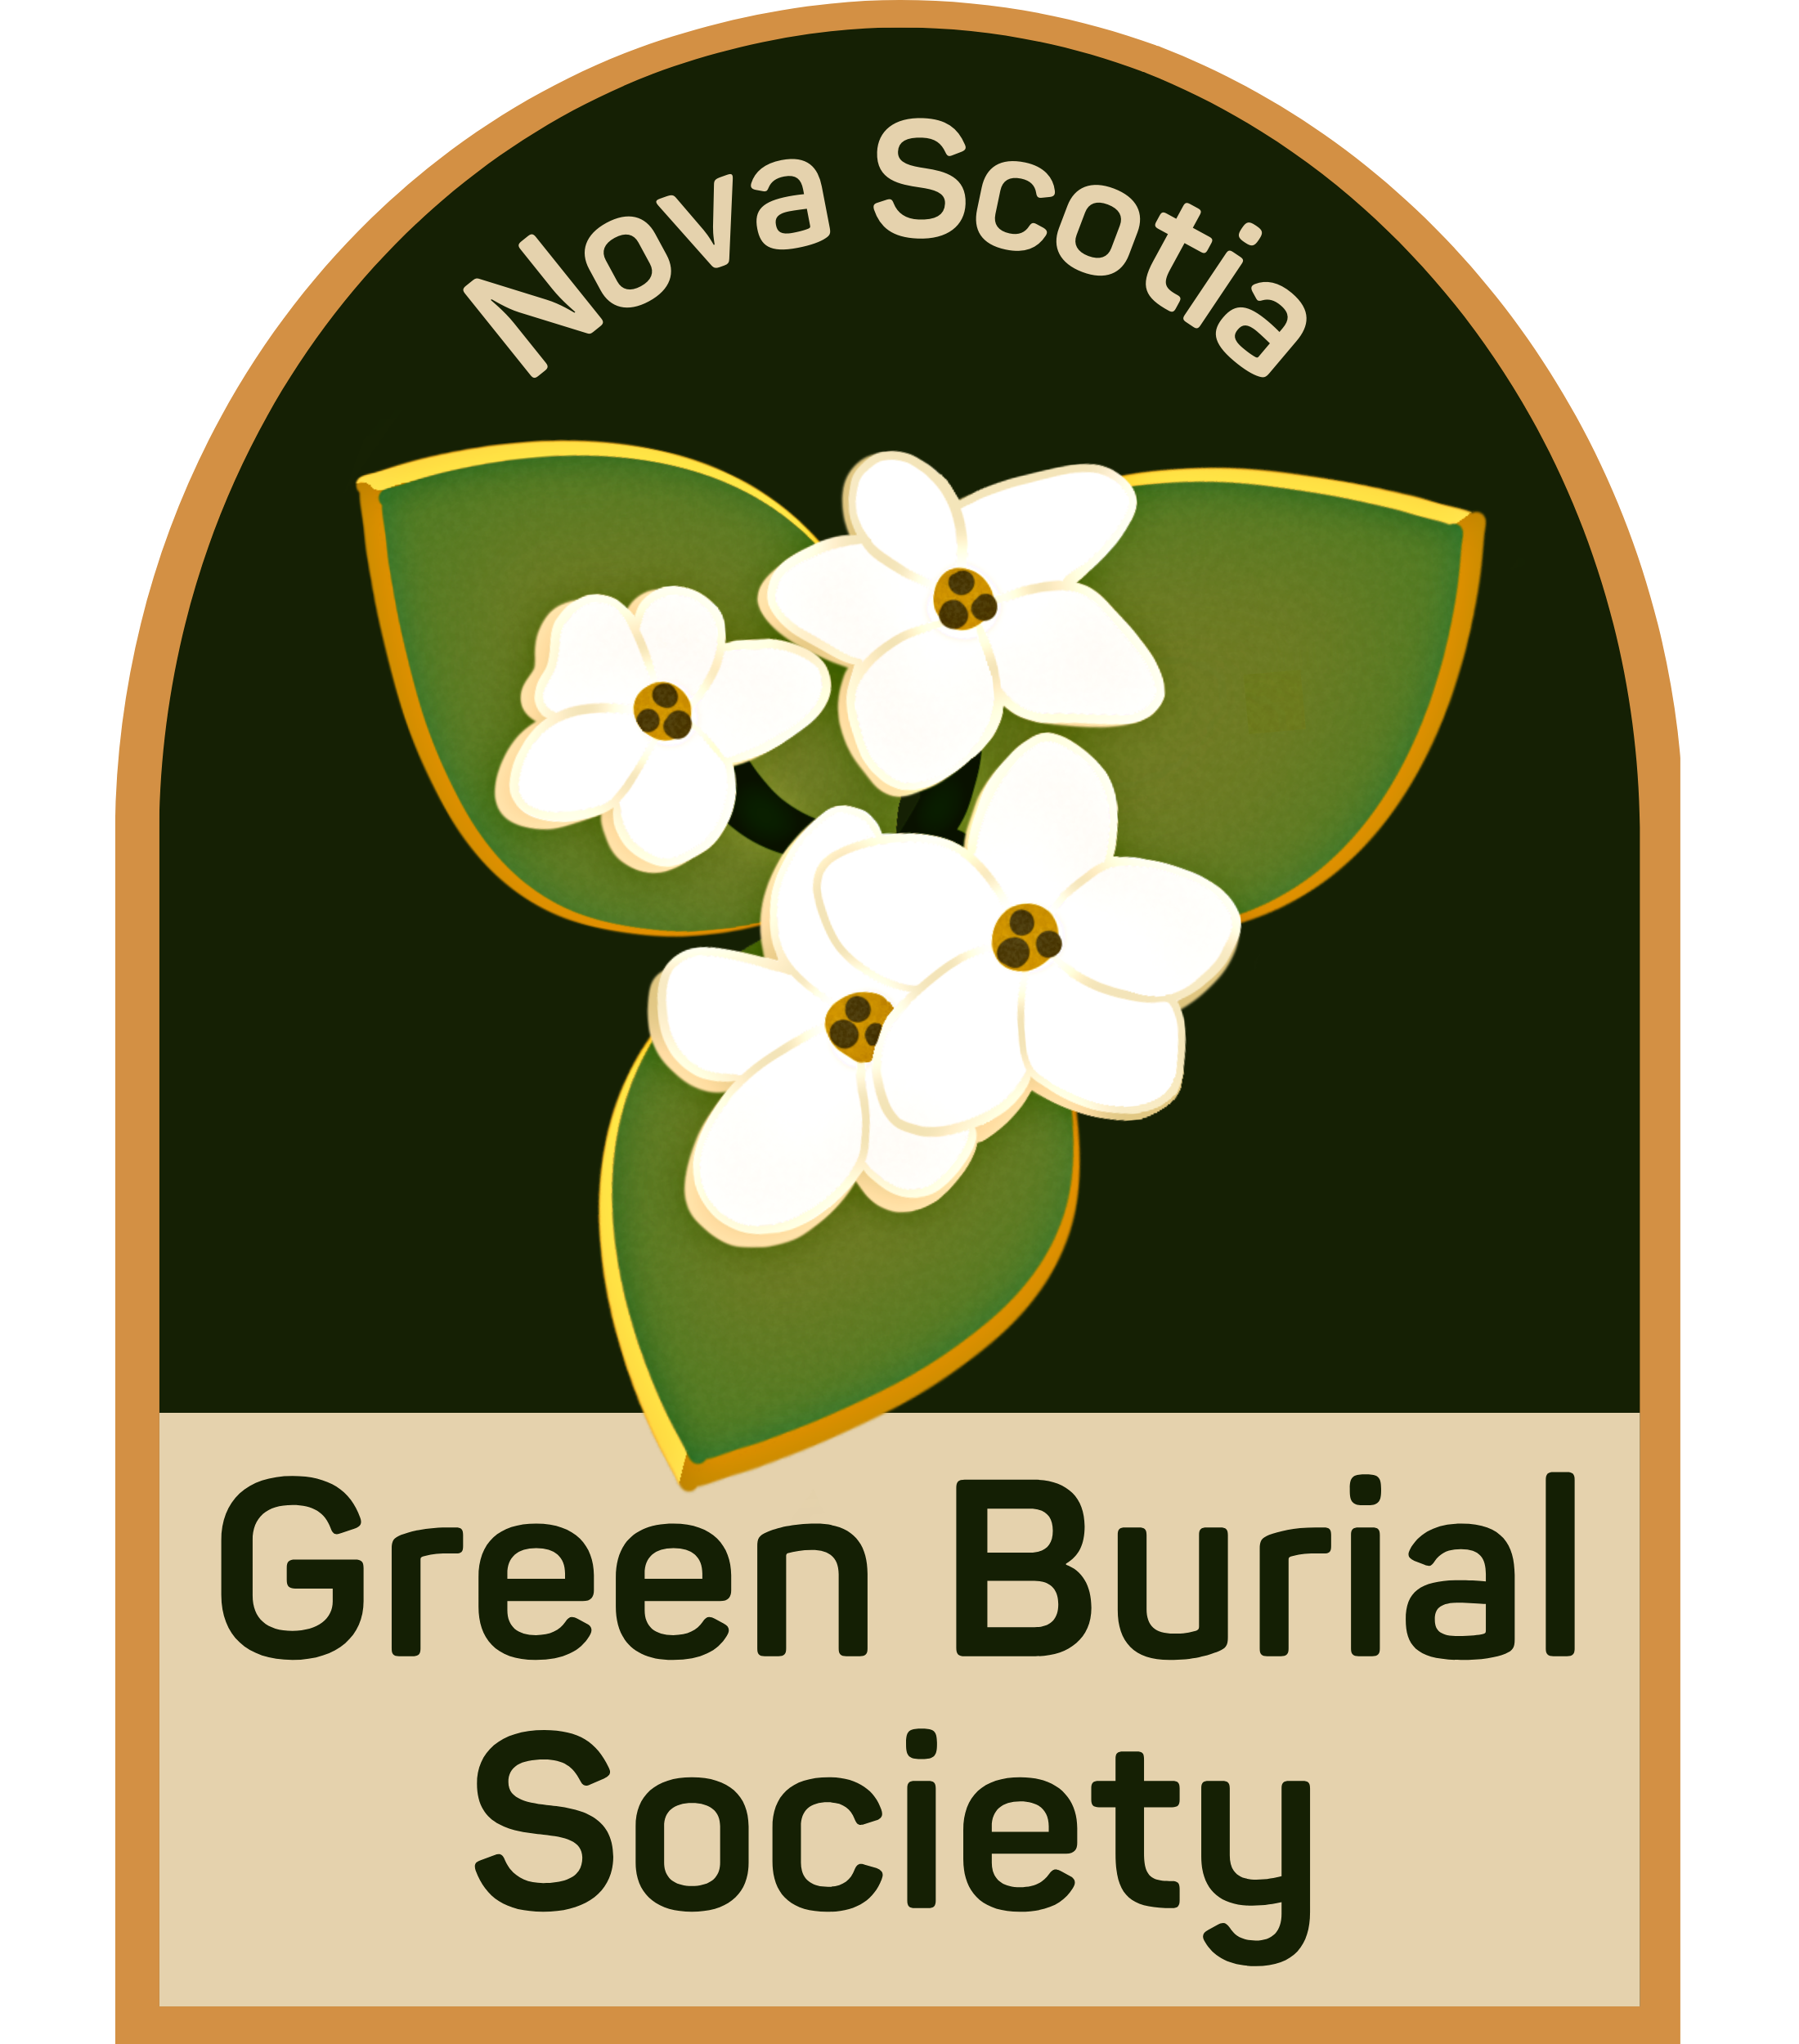 the logo of Green Burial Society of Nova Scotia